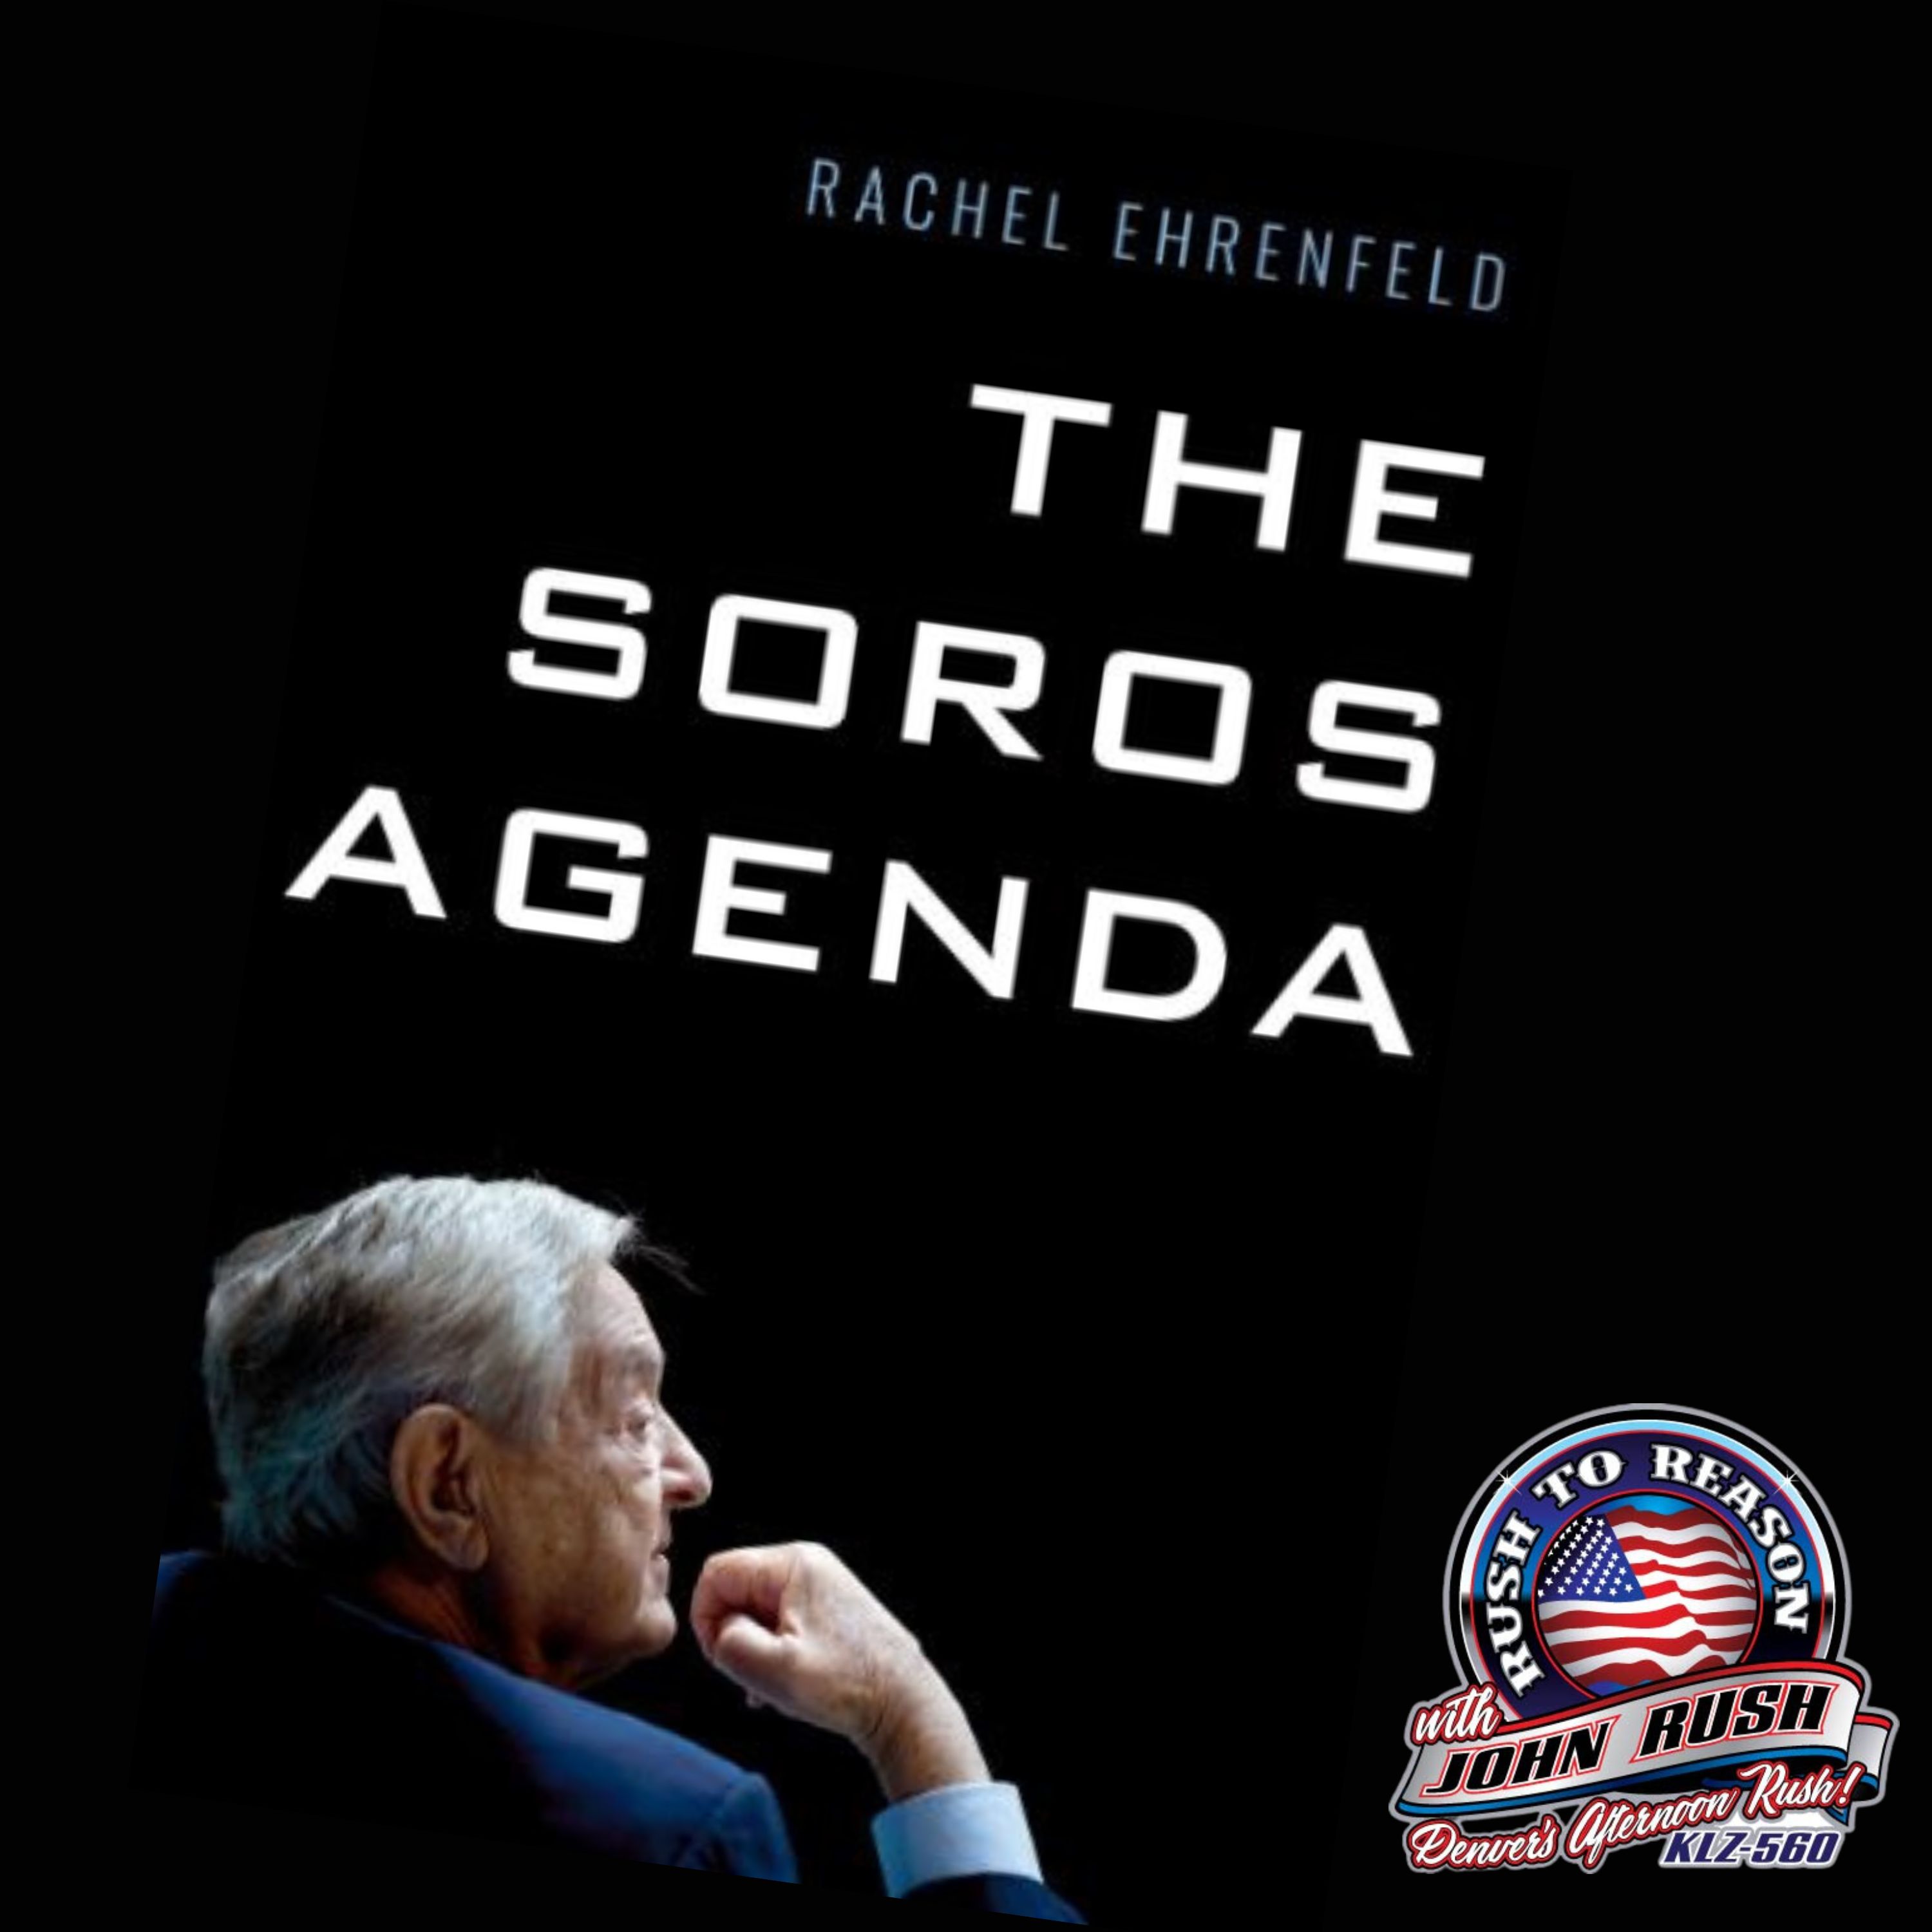 Rachel Ehrenfeld, author of The Soros Agenda